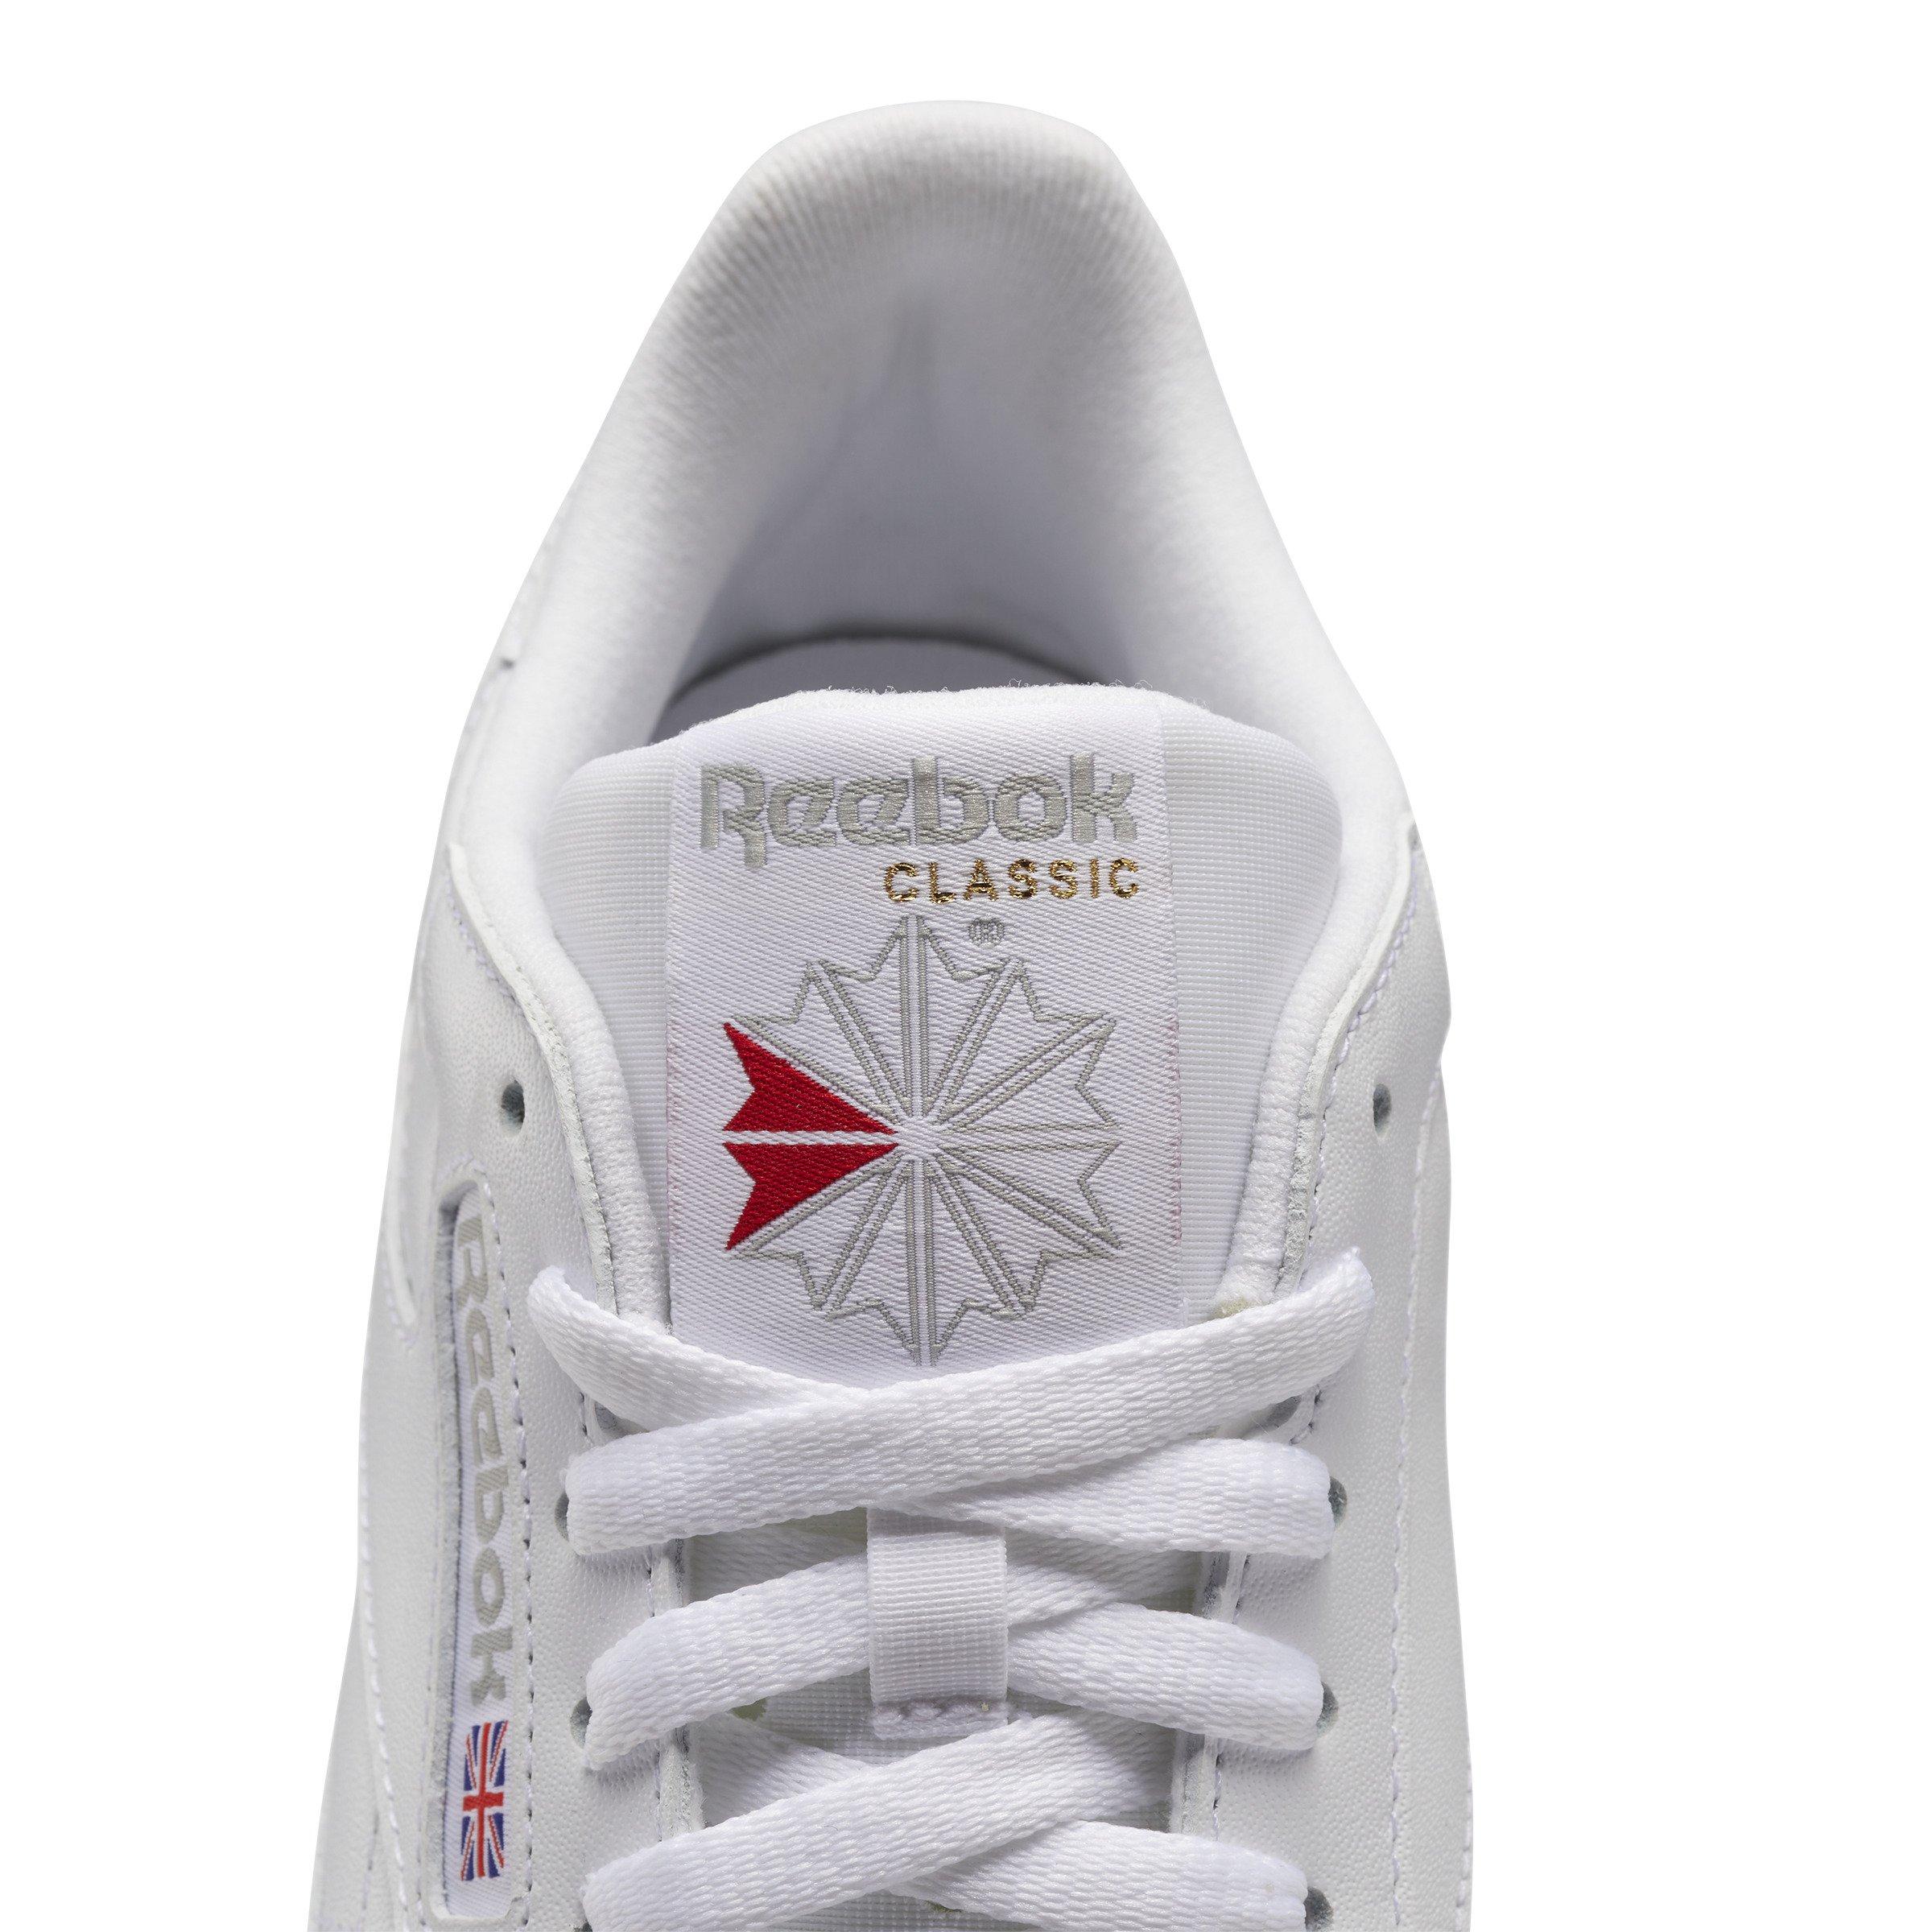 Reebok Classic Leather White/Grey/Gum Men's Shoe - Hibbett